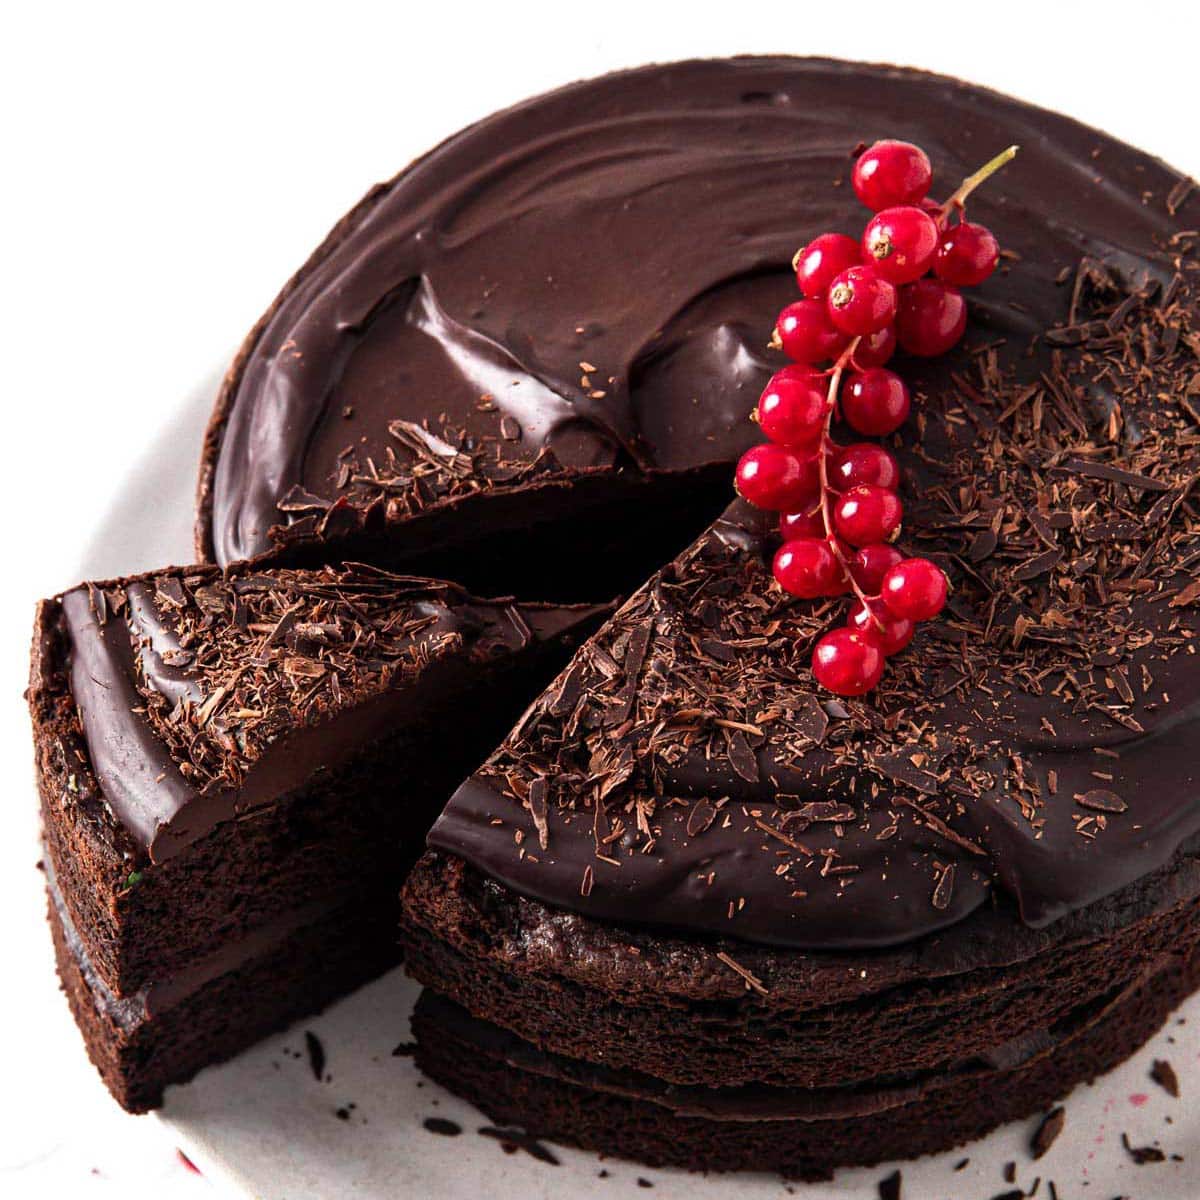 a chocolate sugar free birthday cake topped with chocolate ganache